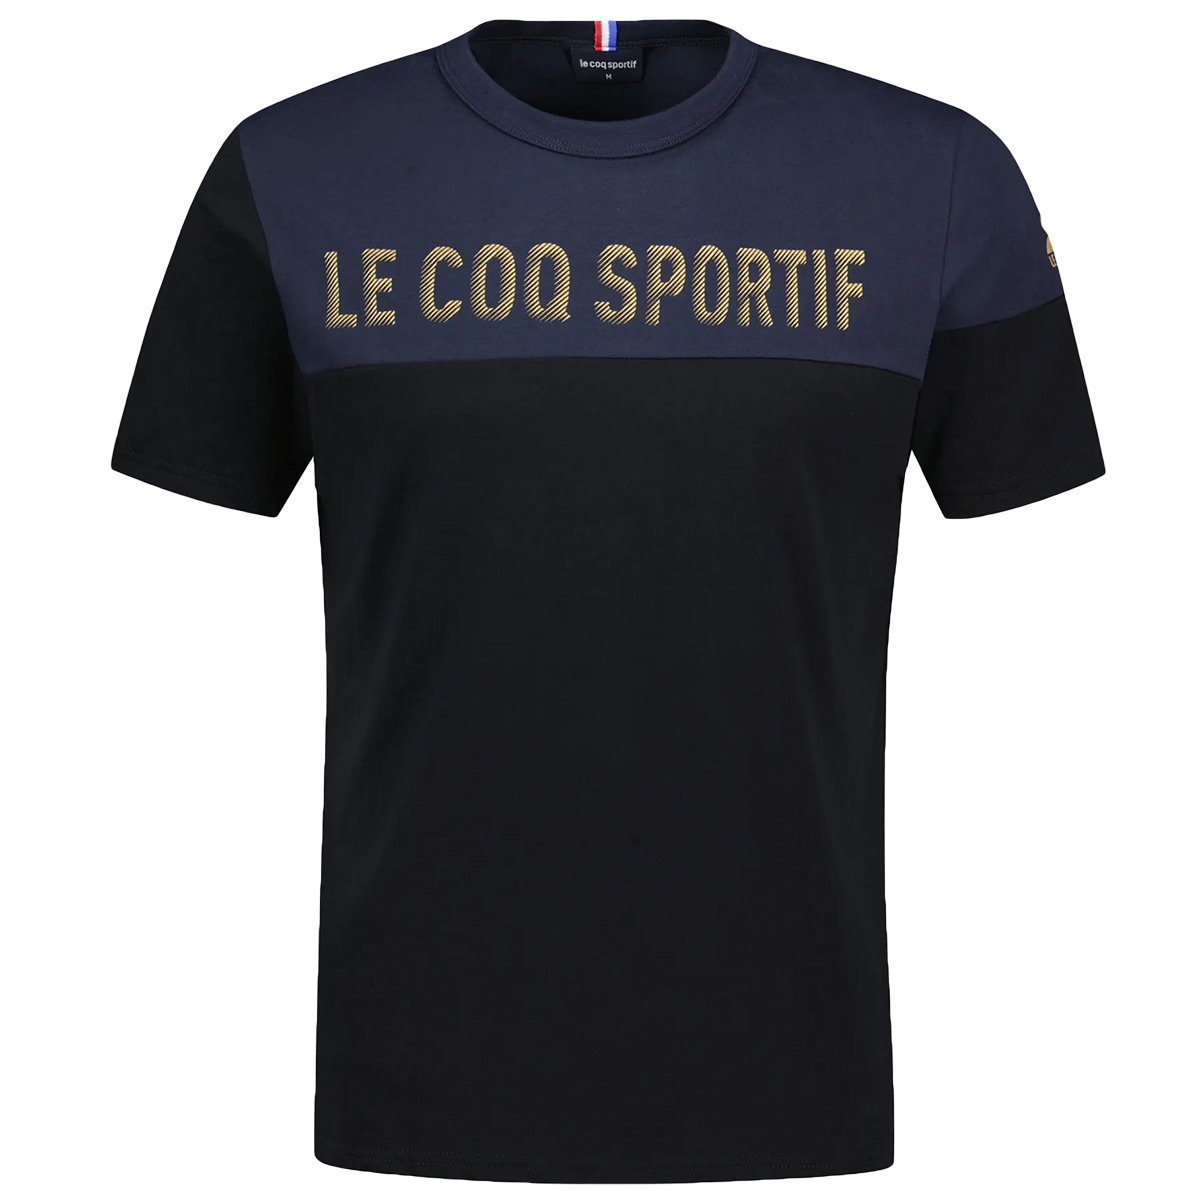 Le Coq Sportif Noel Sp Tee Ss N 1